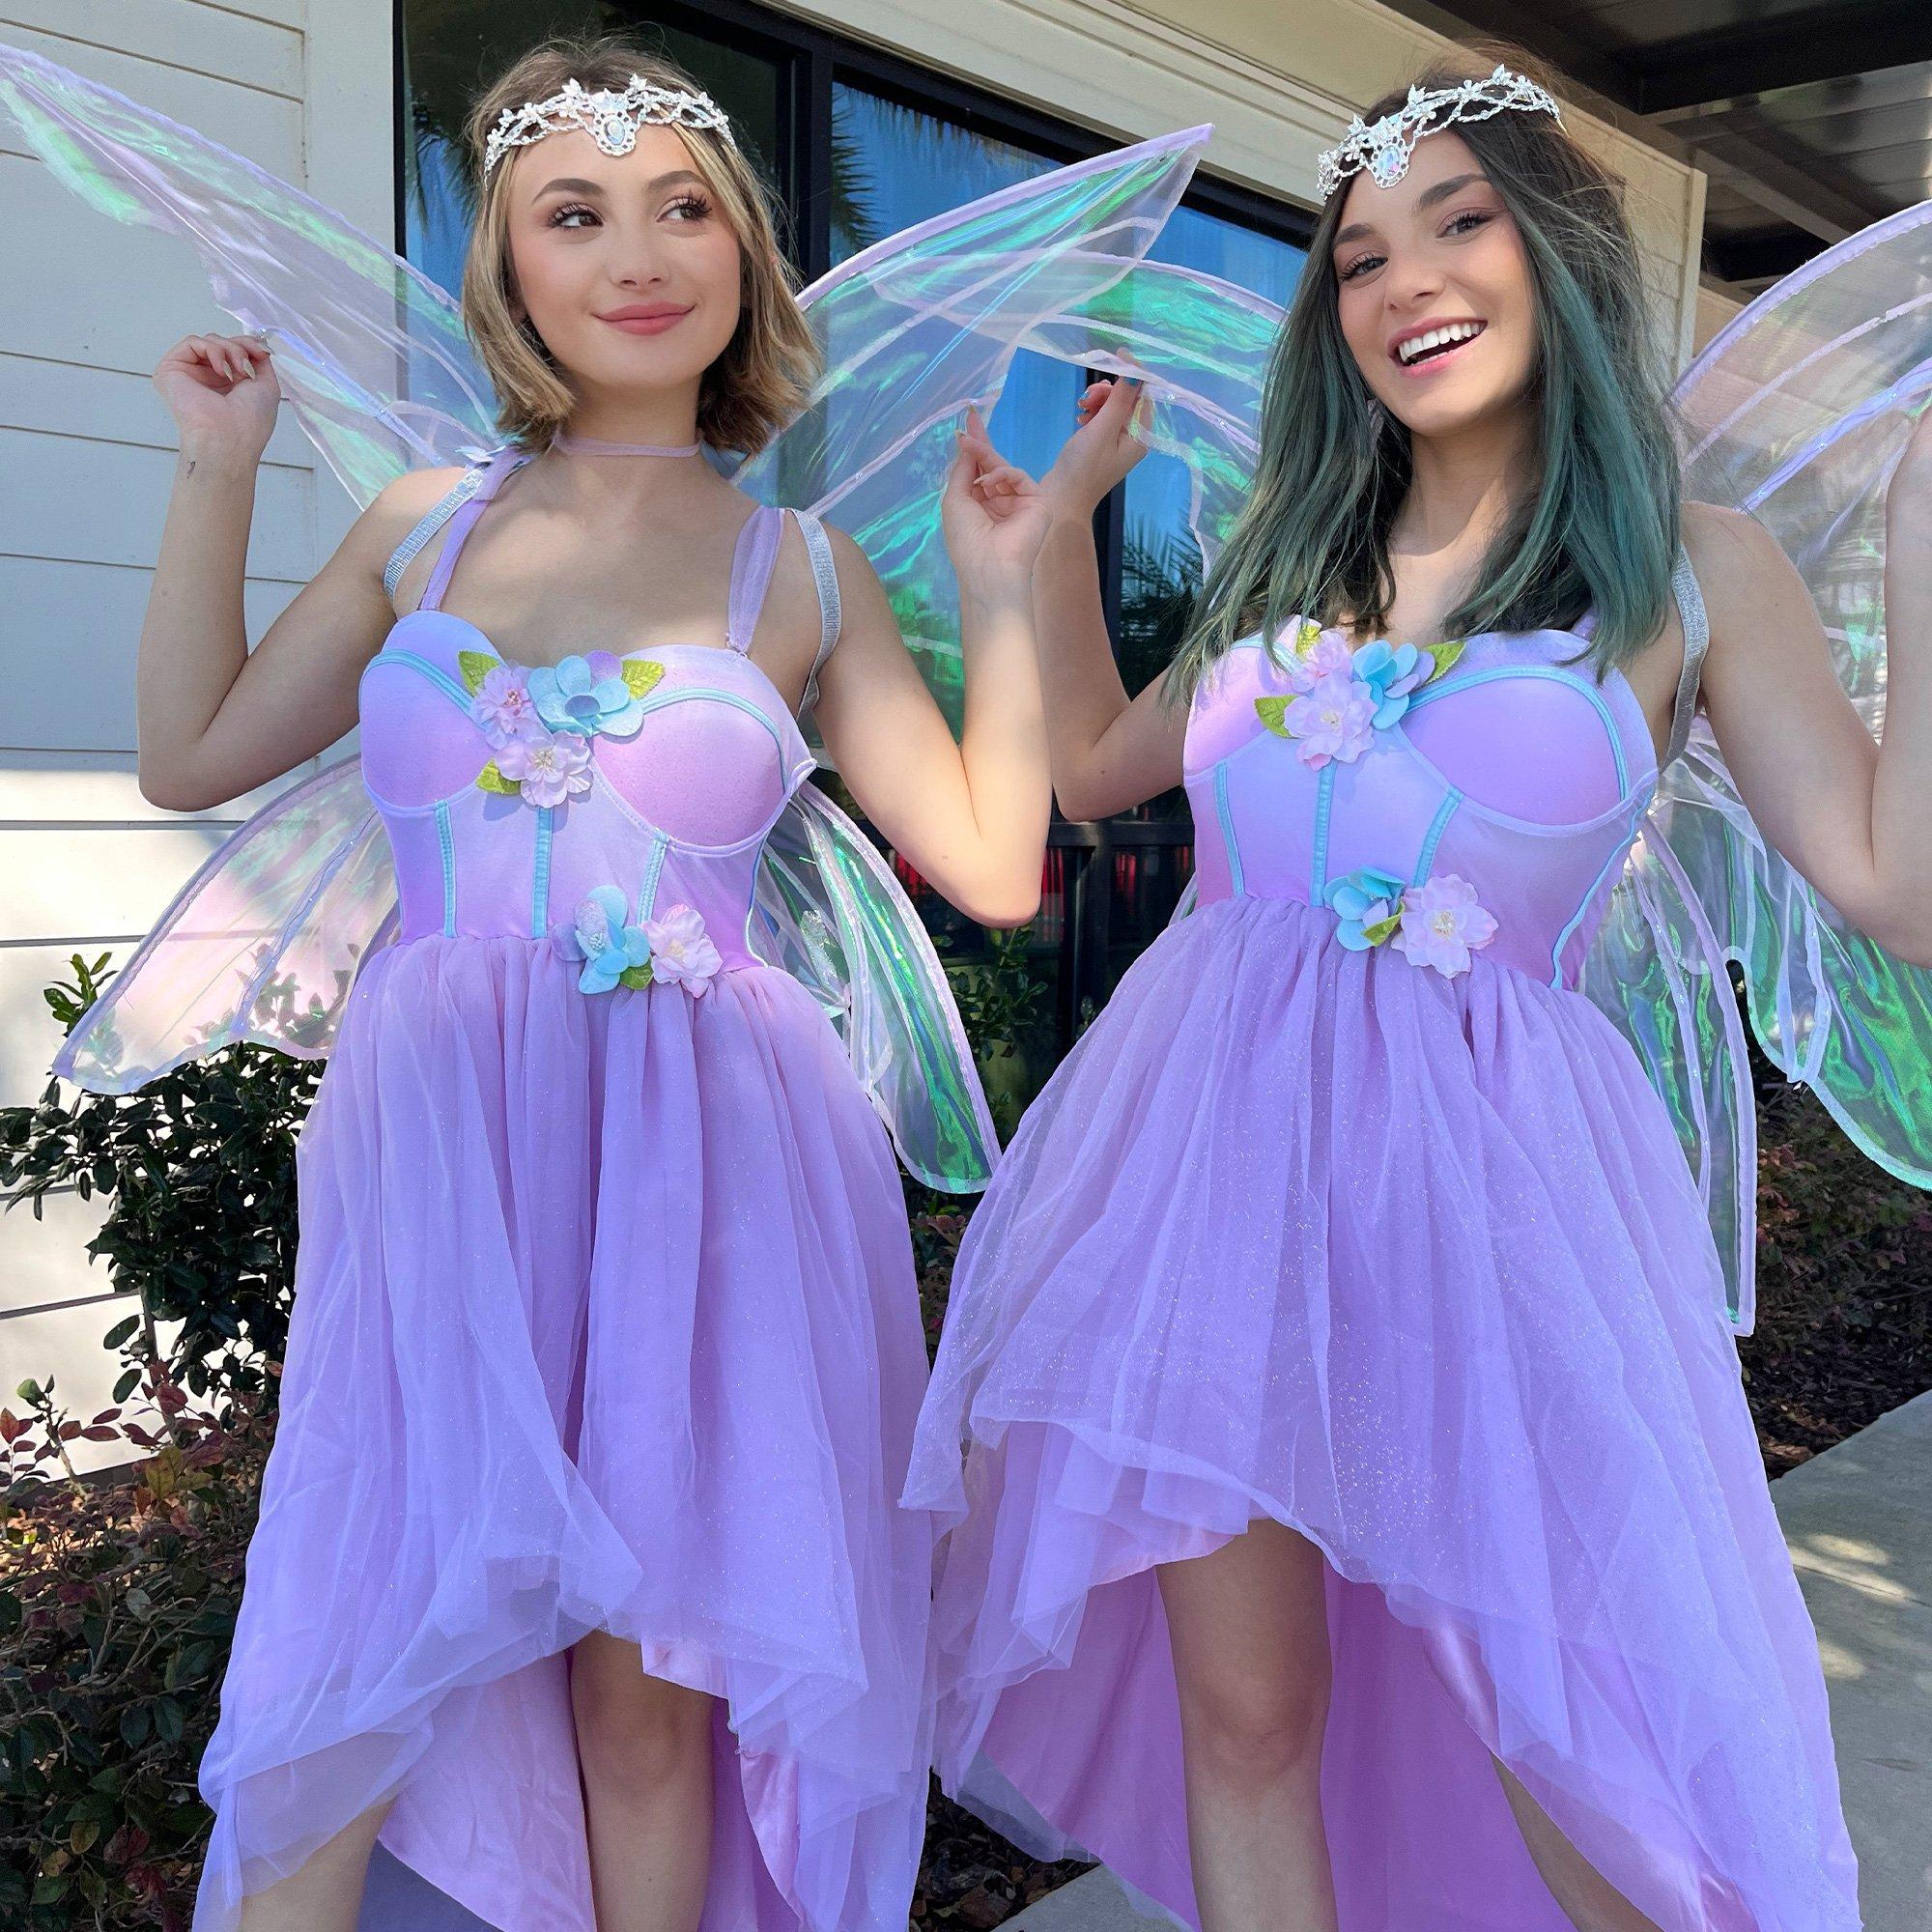 Adult Light-Up Iridescent Fairy Wings